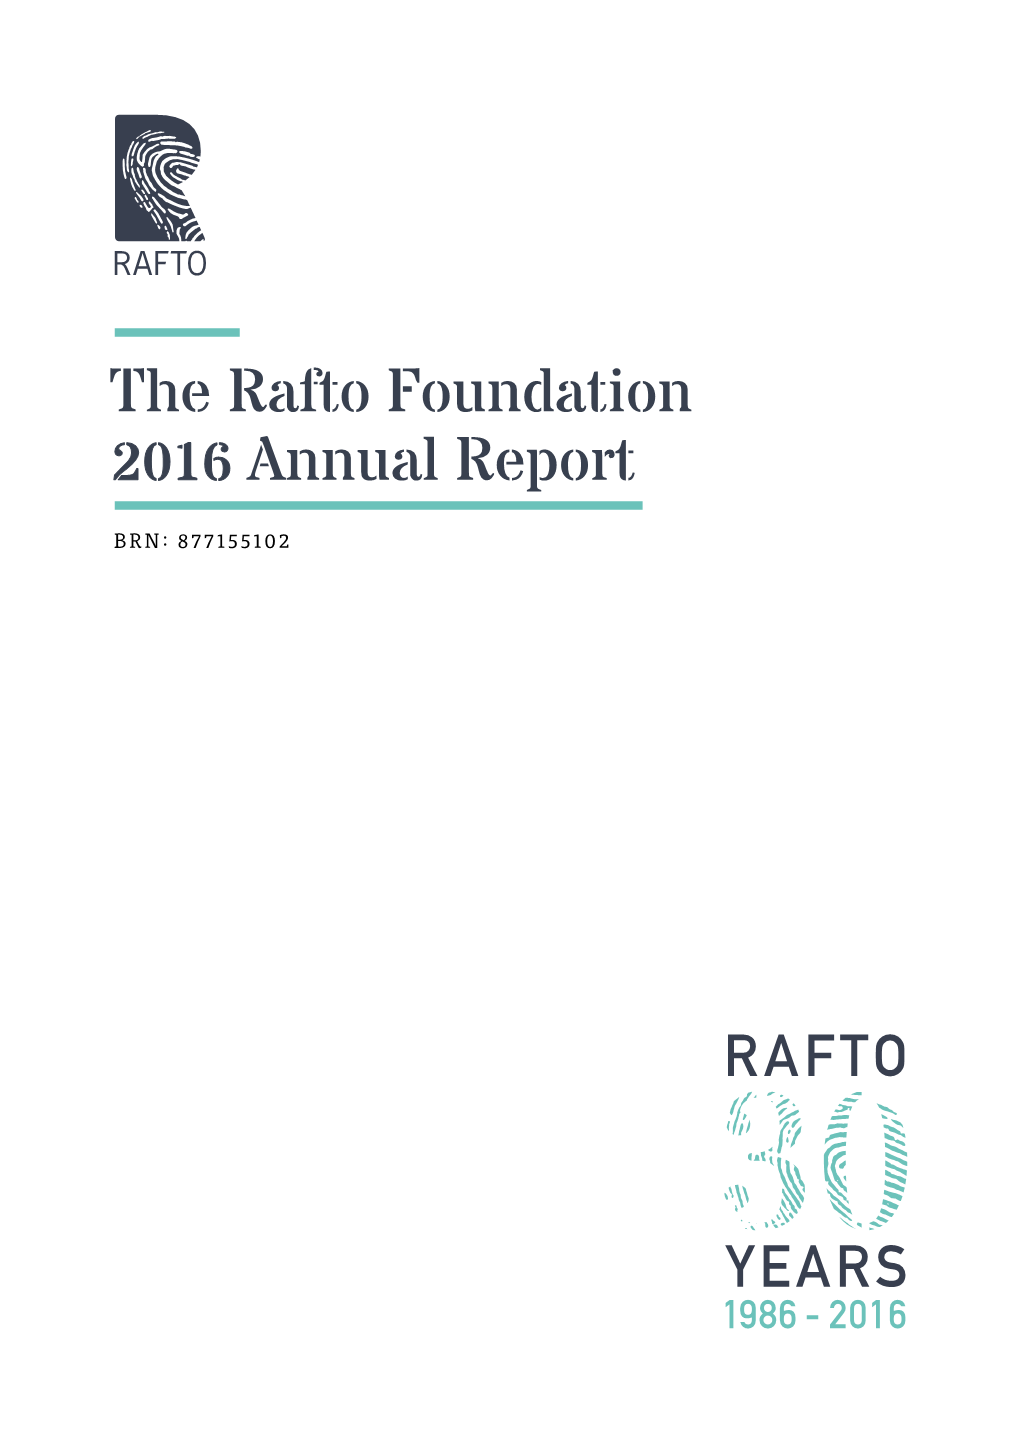 The Rafto Foundation 2016 Annual Report